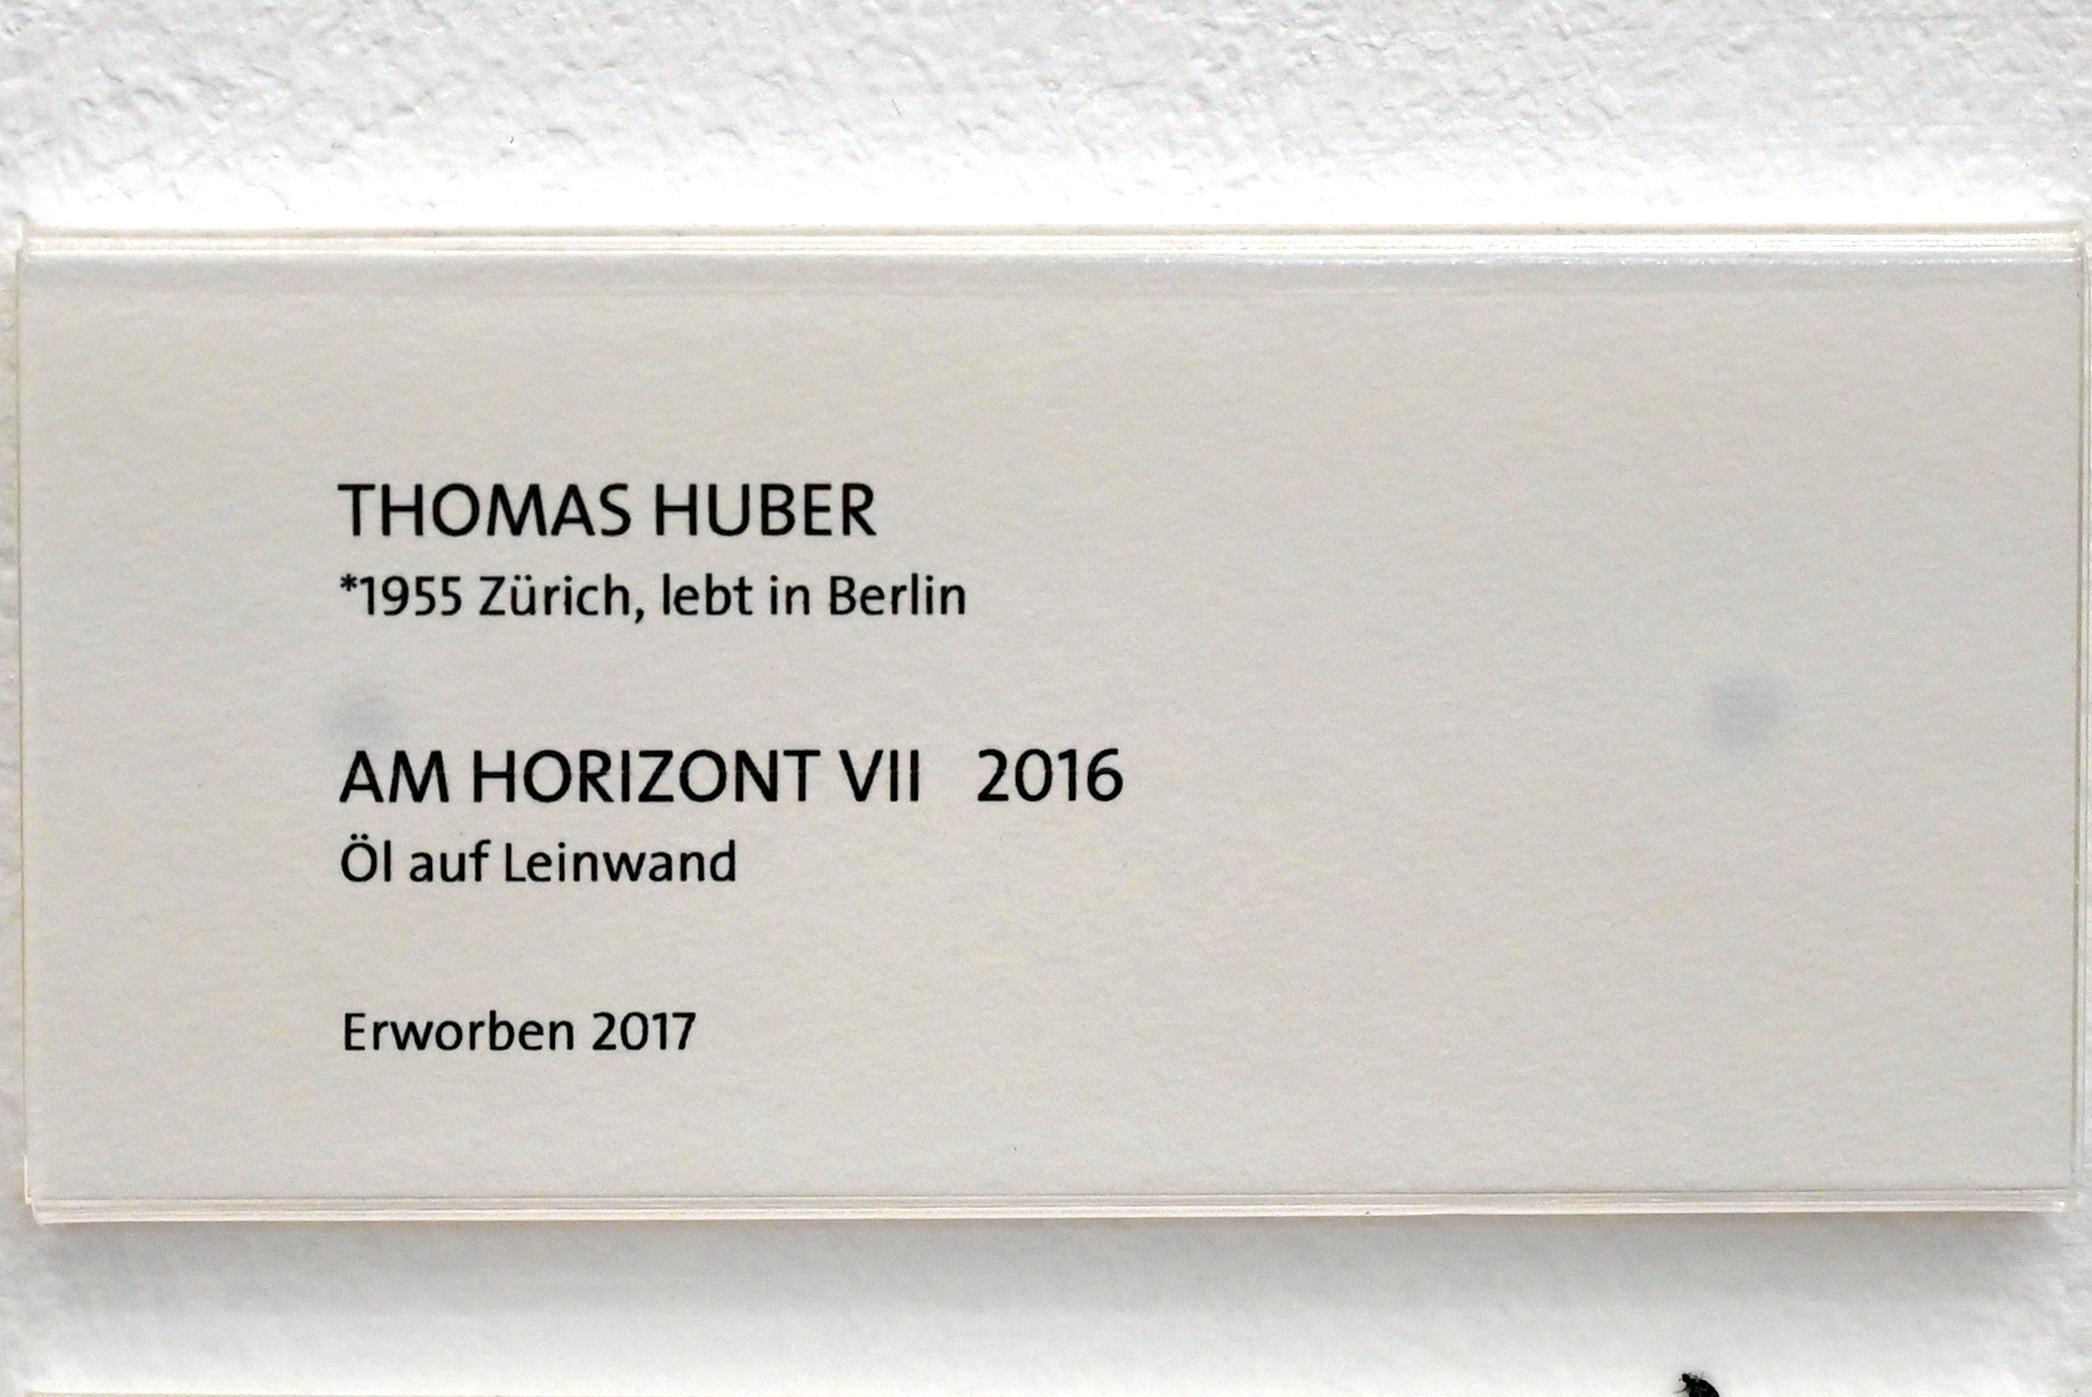 Thomas Huber (2016), Am Horizont VII, Bonn, Kunstmuseum Bonn, Saal 3, 2016, Bild 2/2